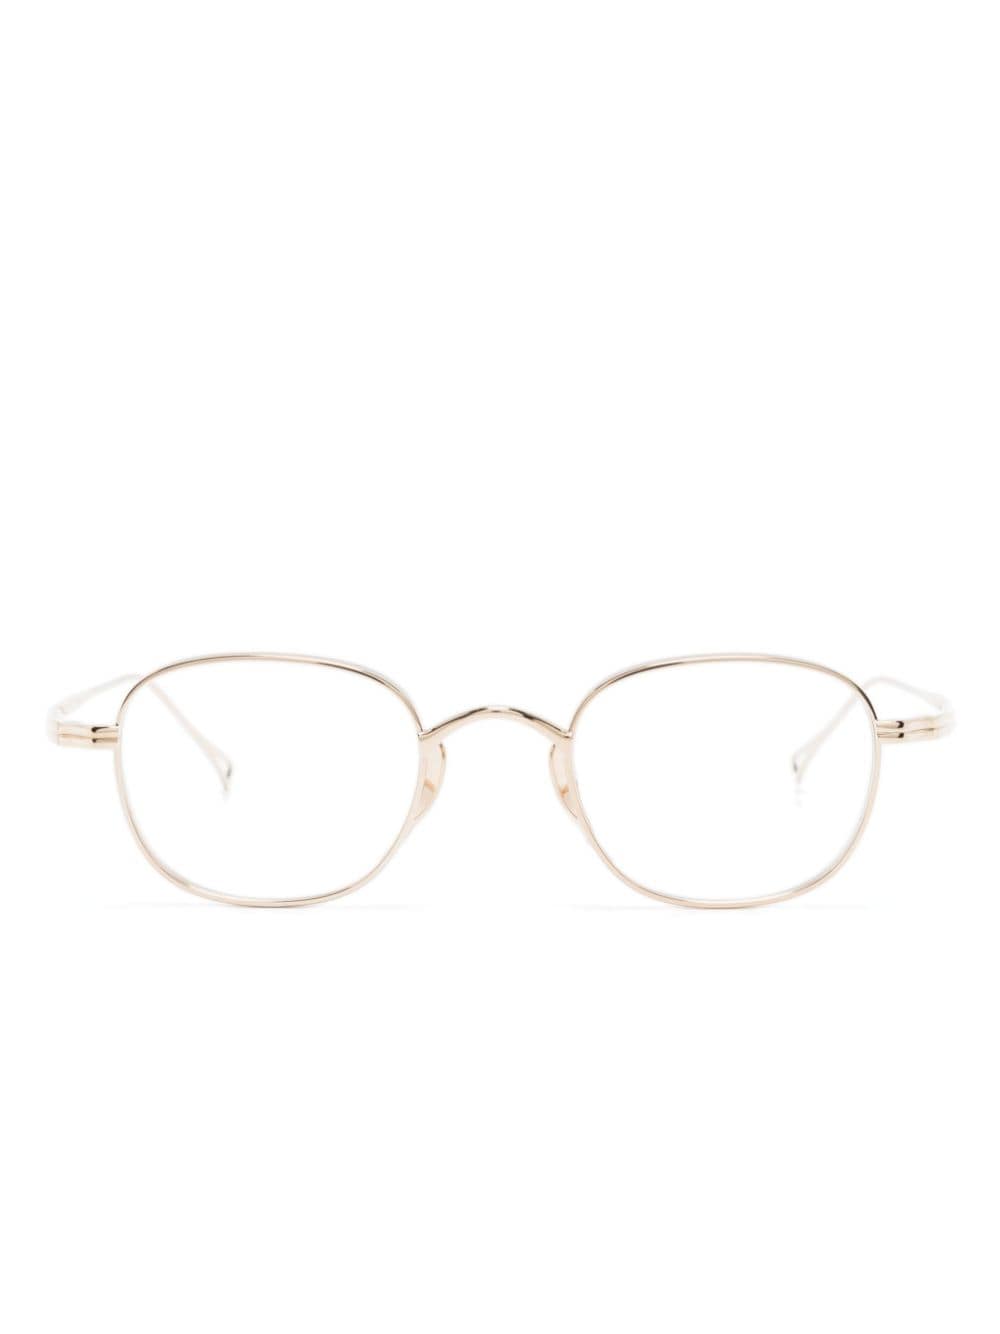 Kame Mannen KMN/114 square-frame glasses - Gold von Kame Mannen